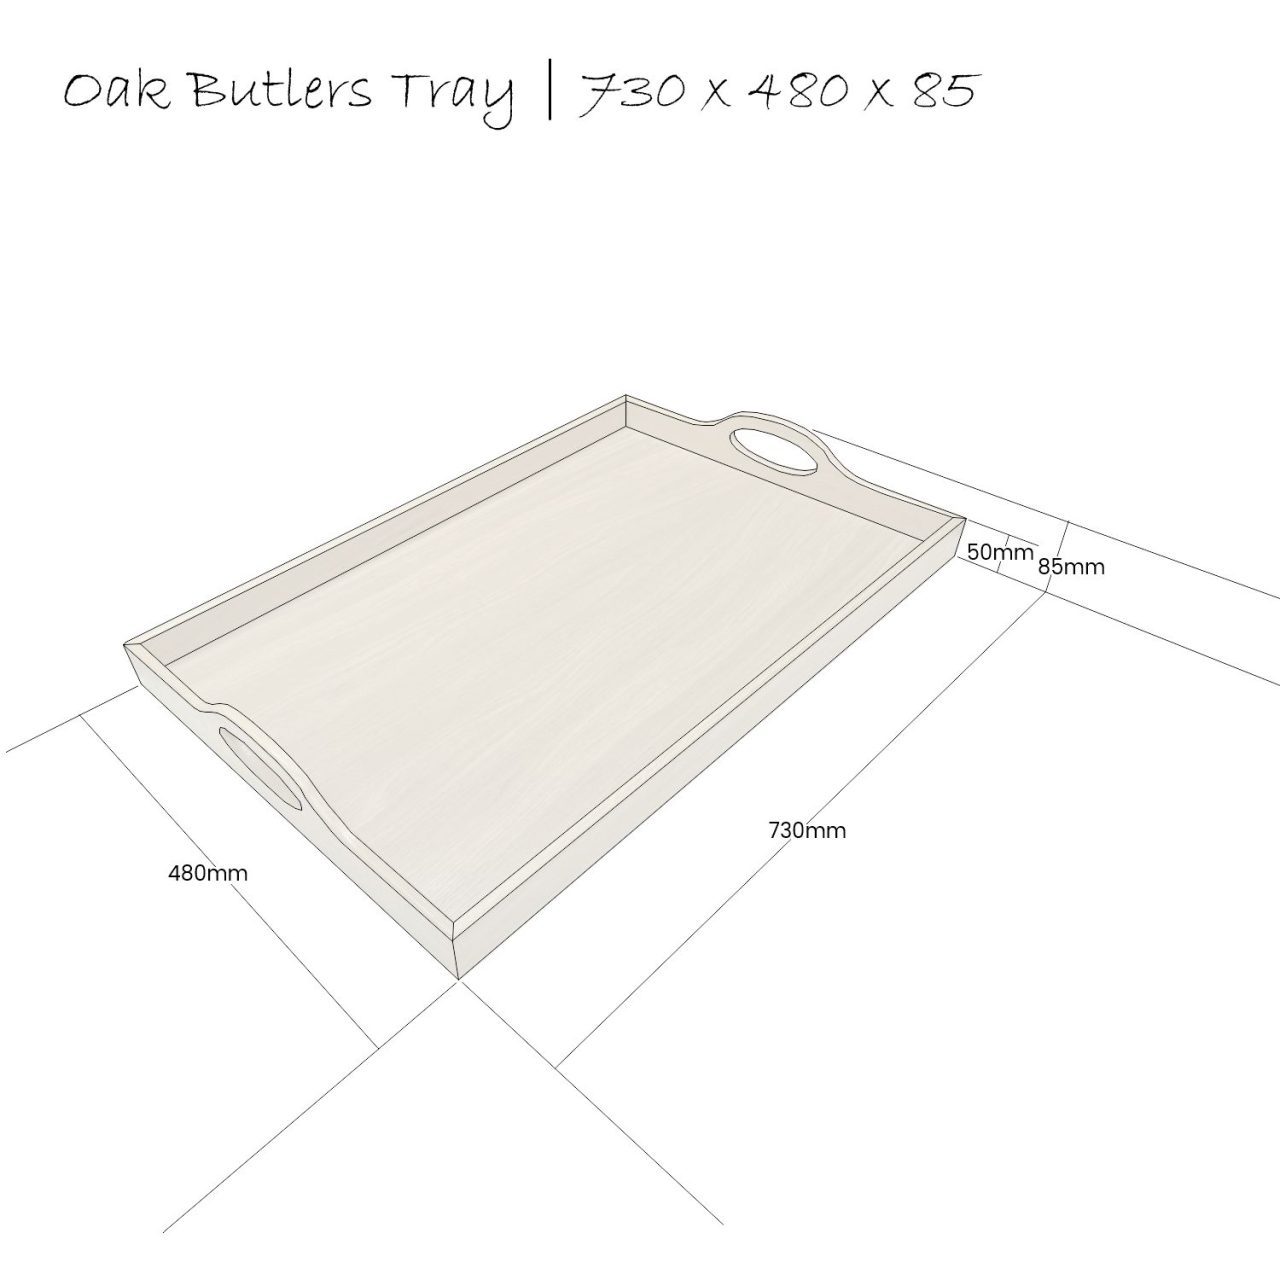 Oak Butlers Tray 730x480x85 schematic